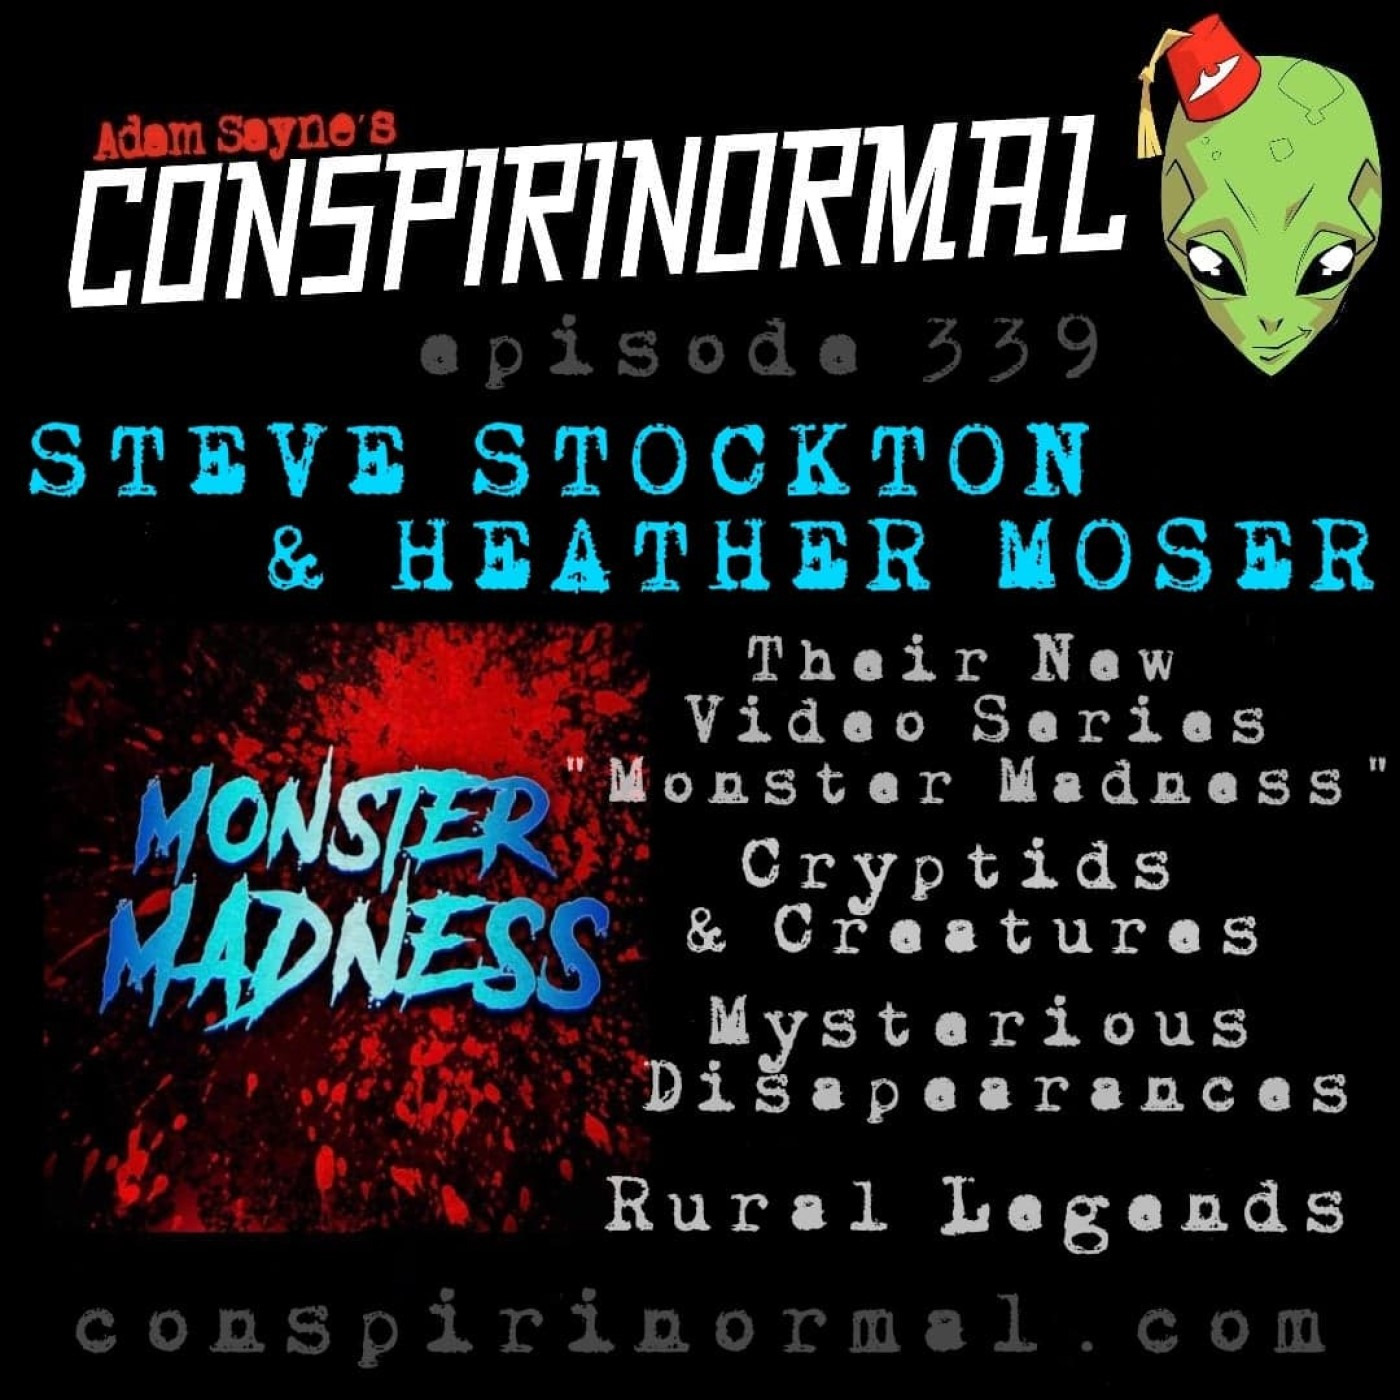 Conspirinormal 339- Heather Moser and Steve Stockton( Monster Madness)